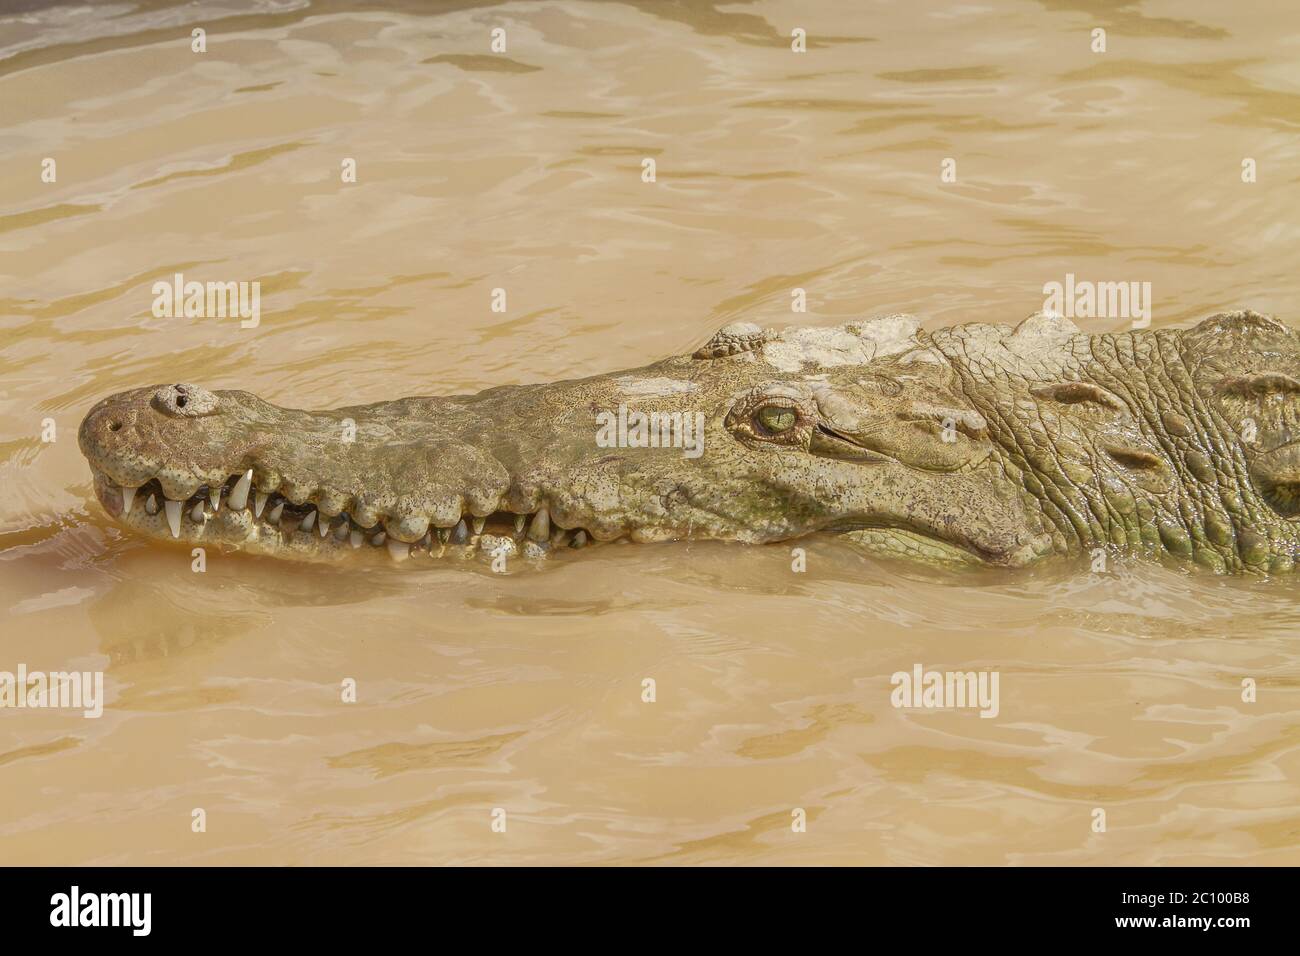 Detail of crocodile's head Stock Photo